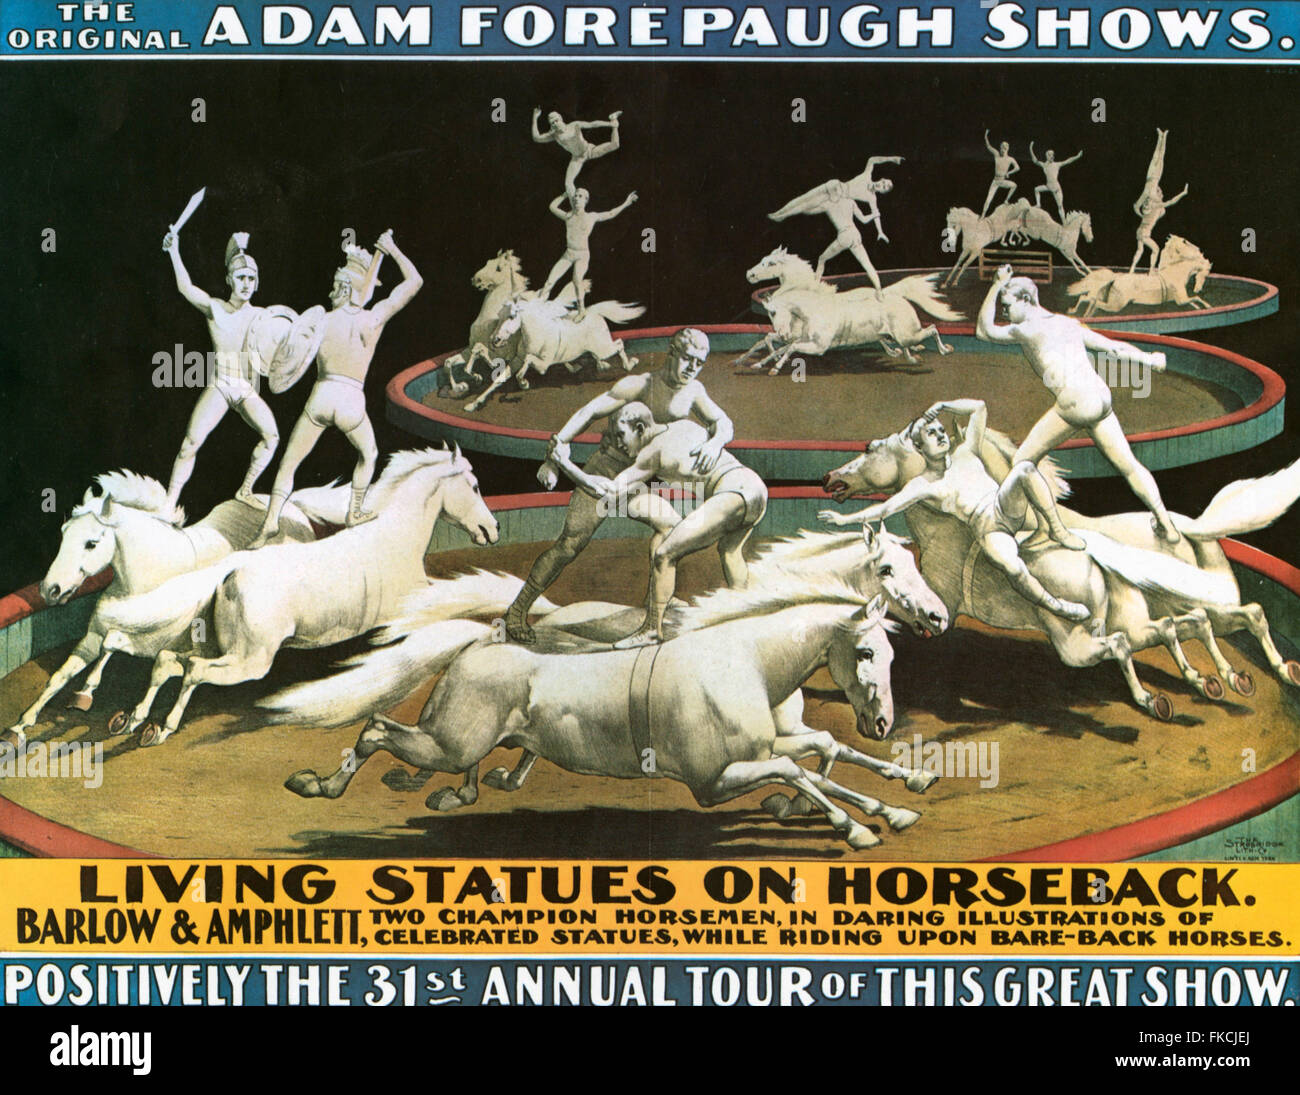 USA Adam Forepaugh Shows Poster Stock Photo